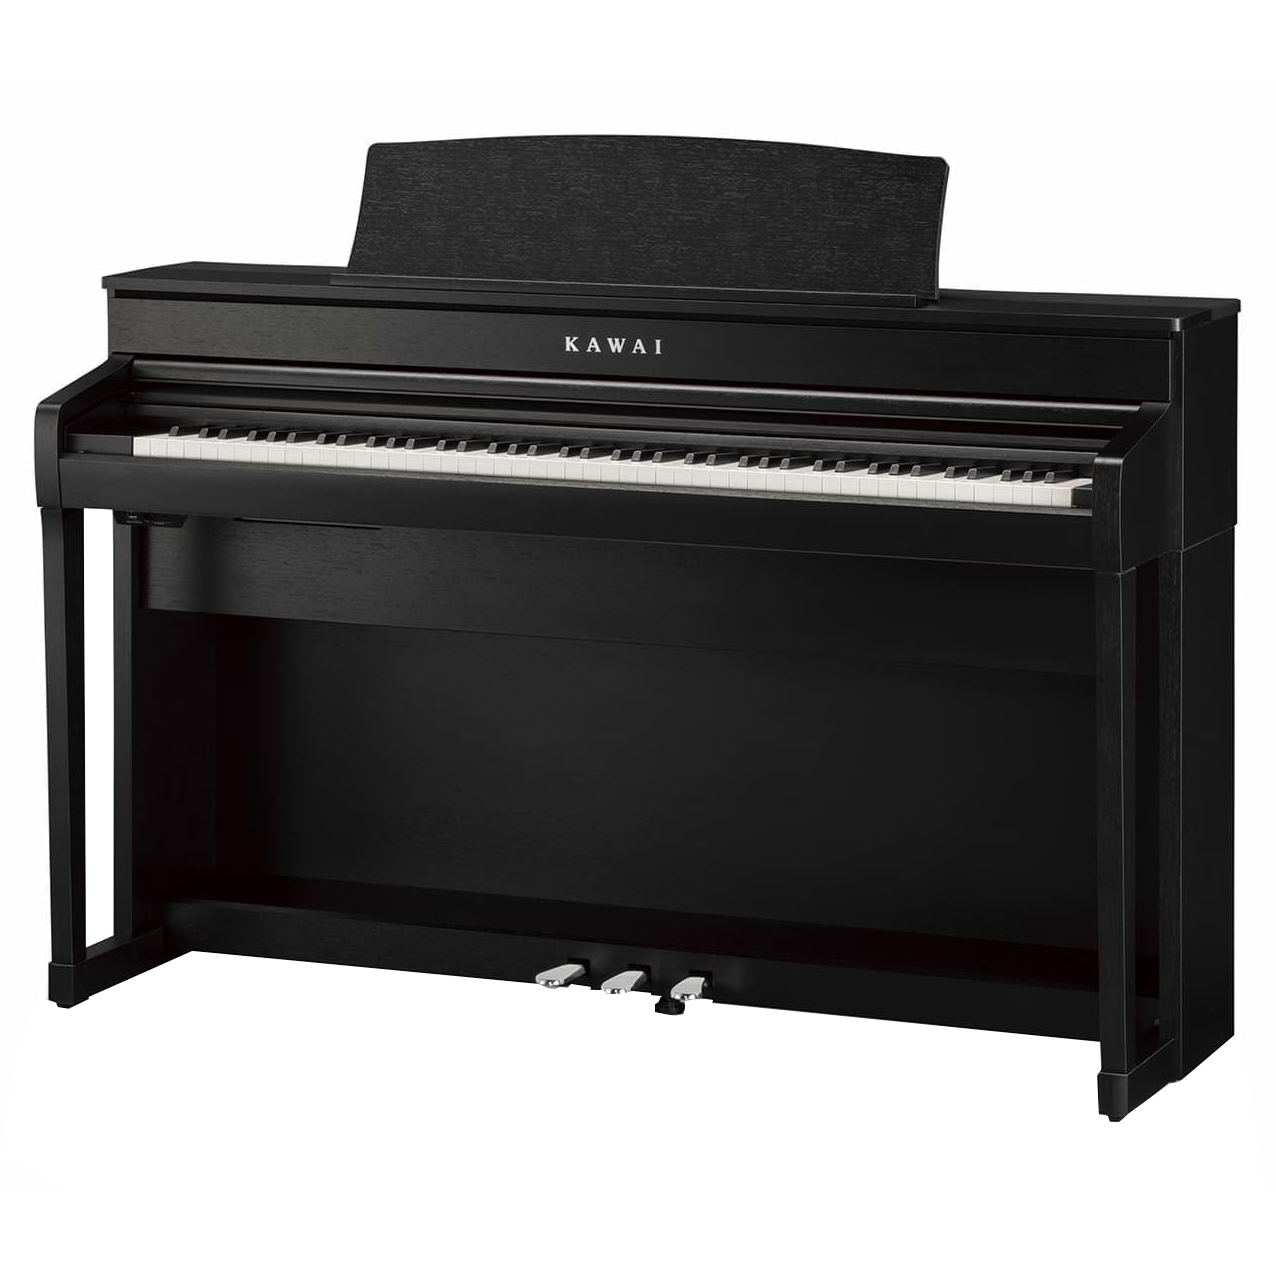 KAWAI CA79B - цифр. пианино, механика GF III, 66 тембров, 256 полифония, 50 вт х 2, цвет черный